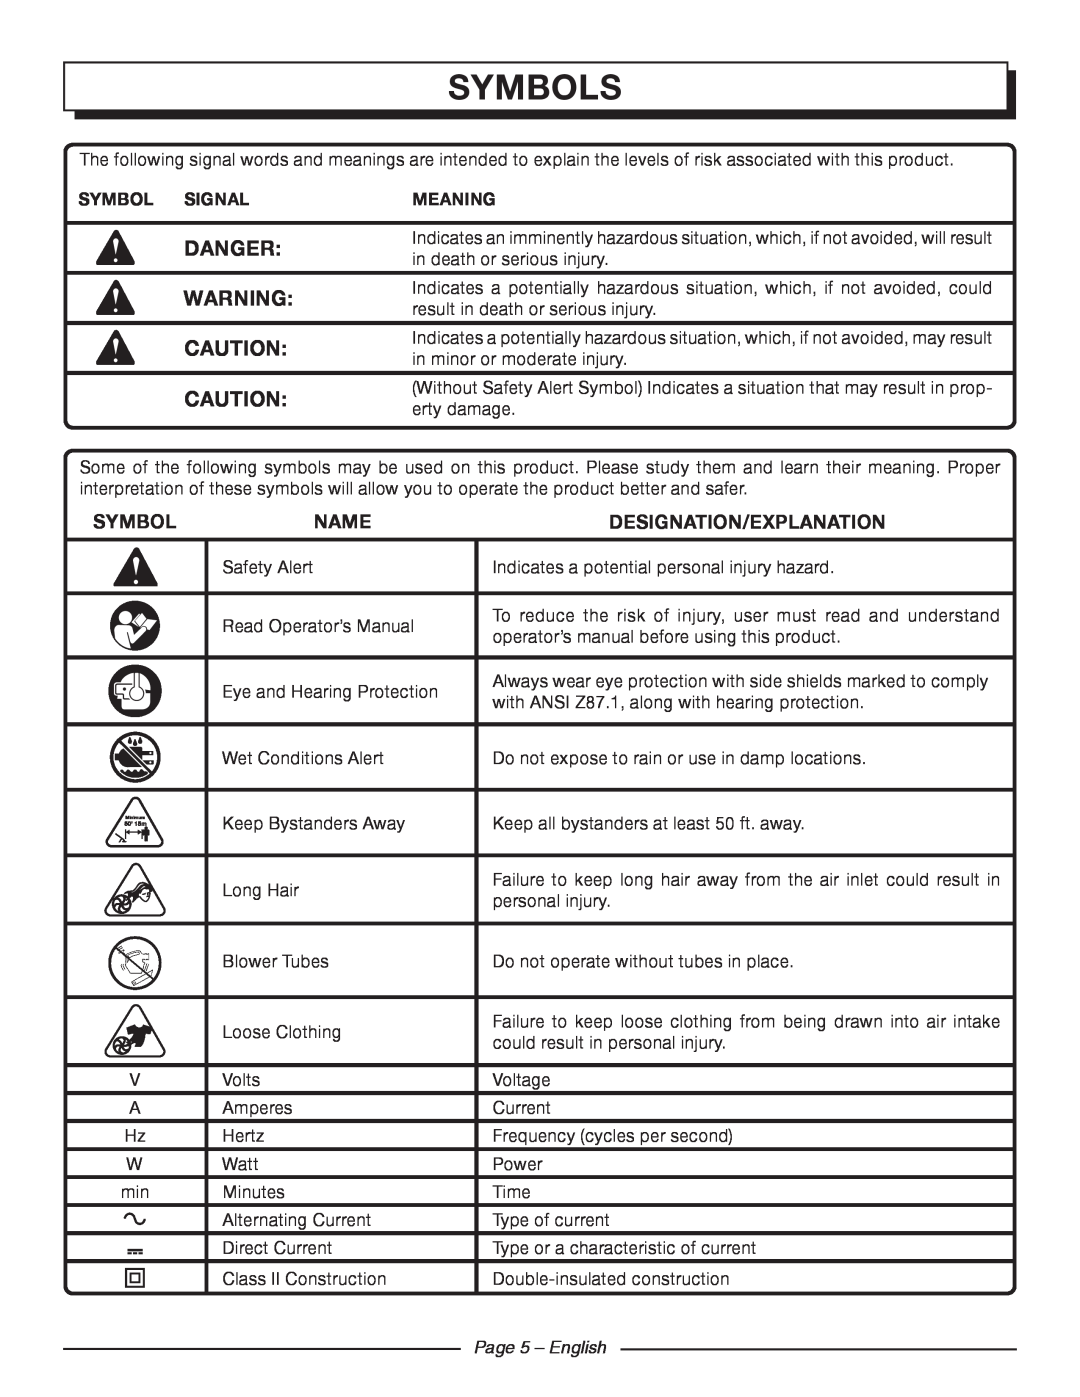 Homelite UT42120 Symbols, Danger, Name, Designation/Explanation, Symbol Signal, Meaning, Page 5 - English 